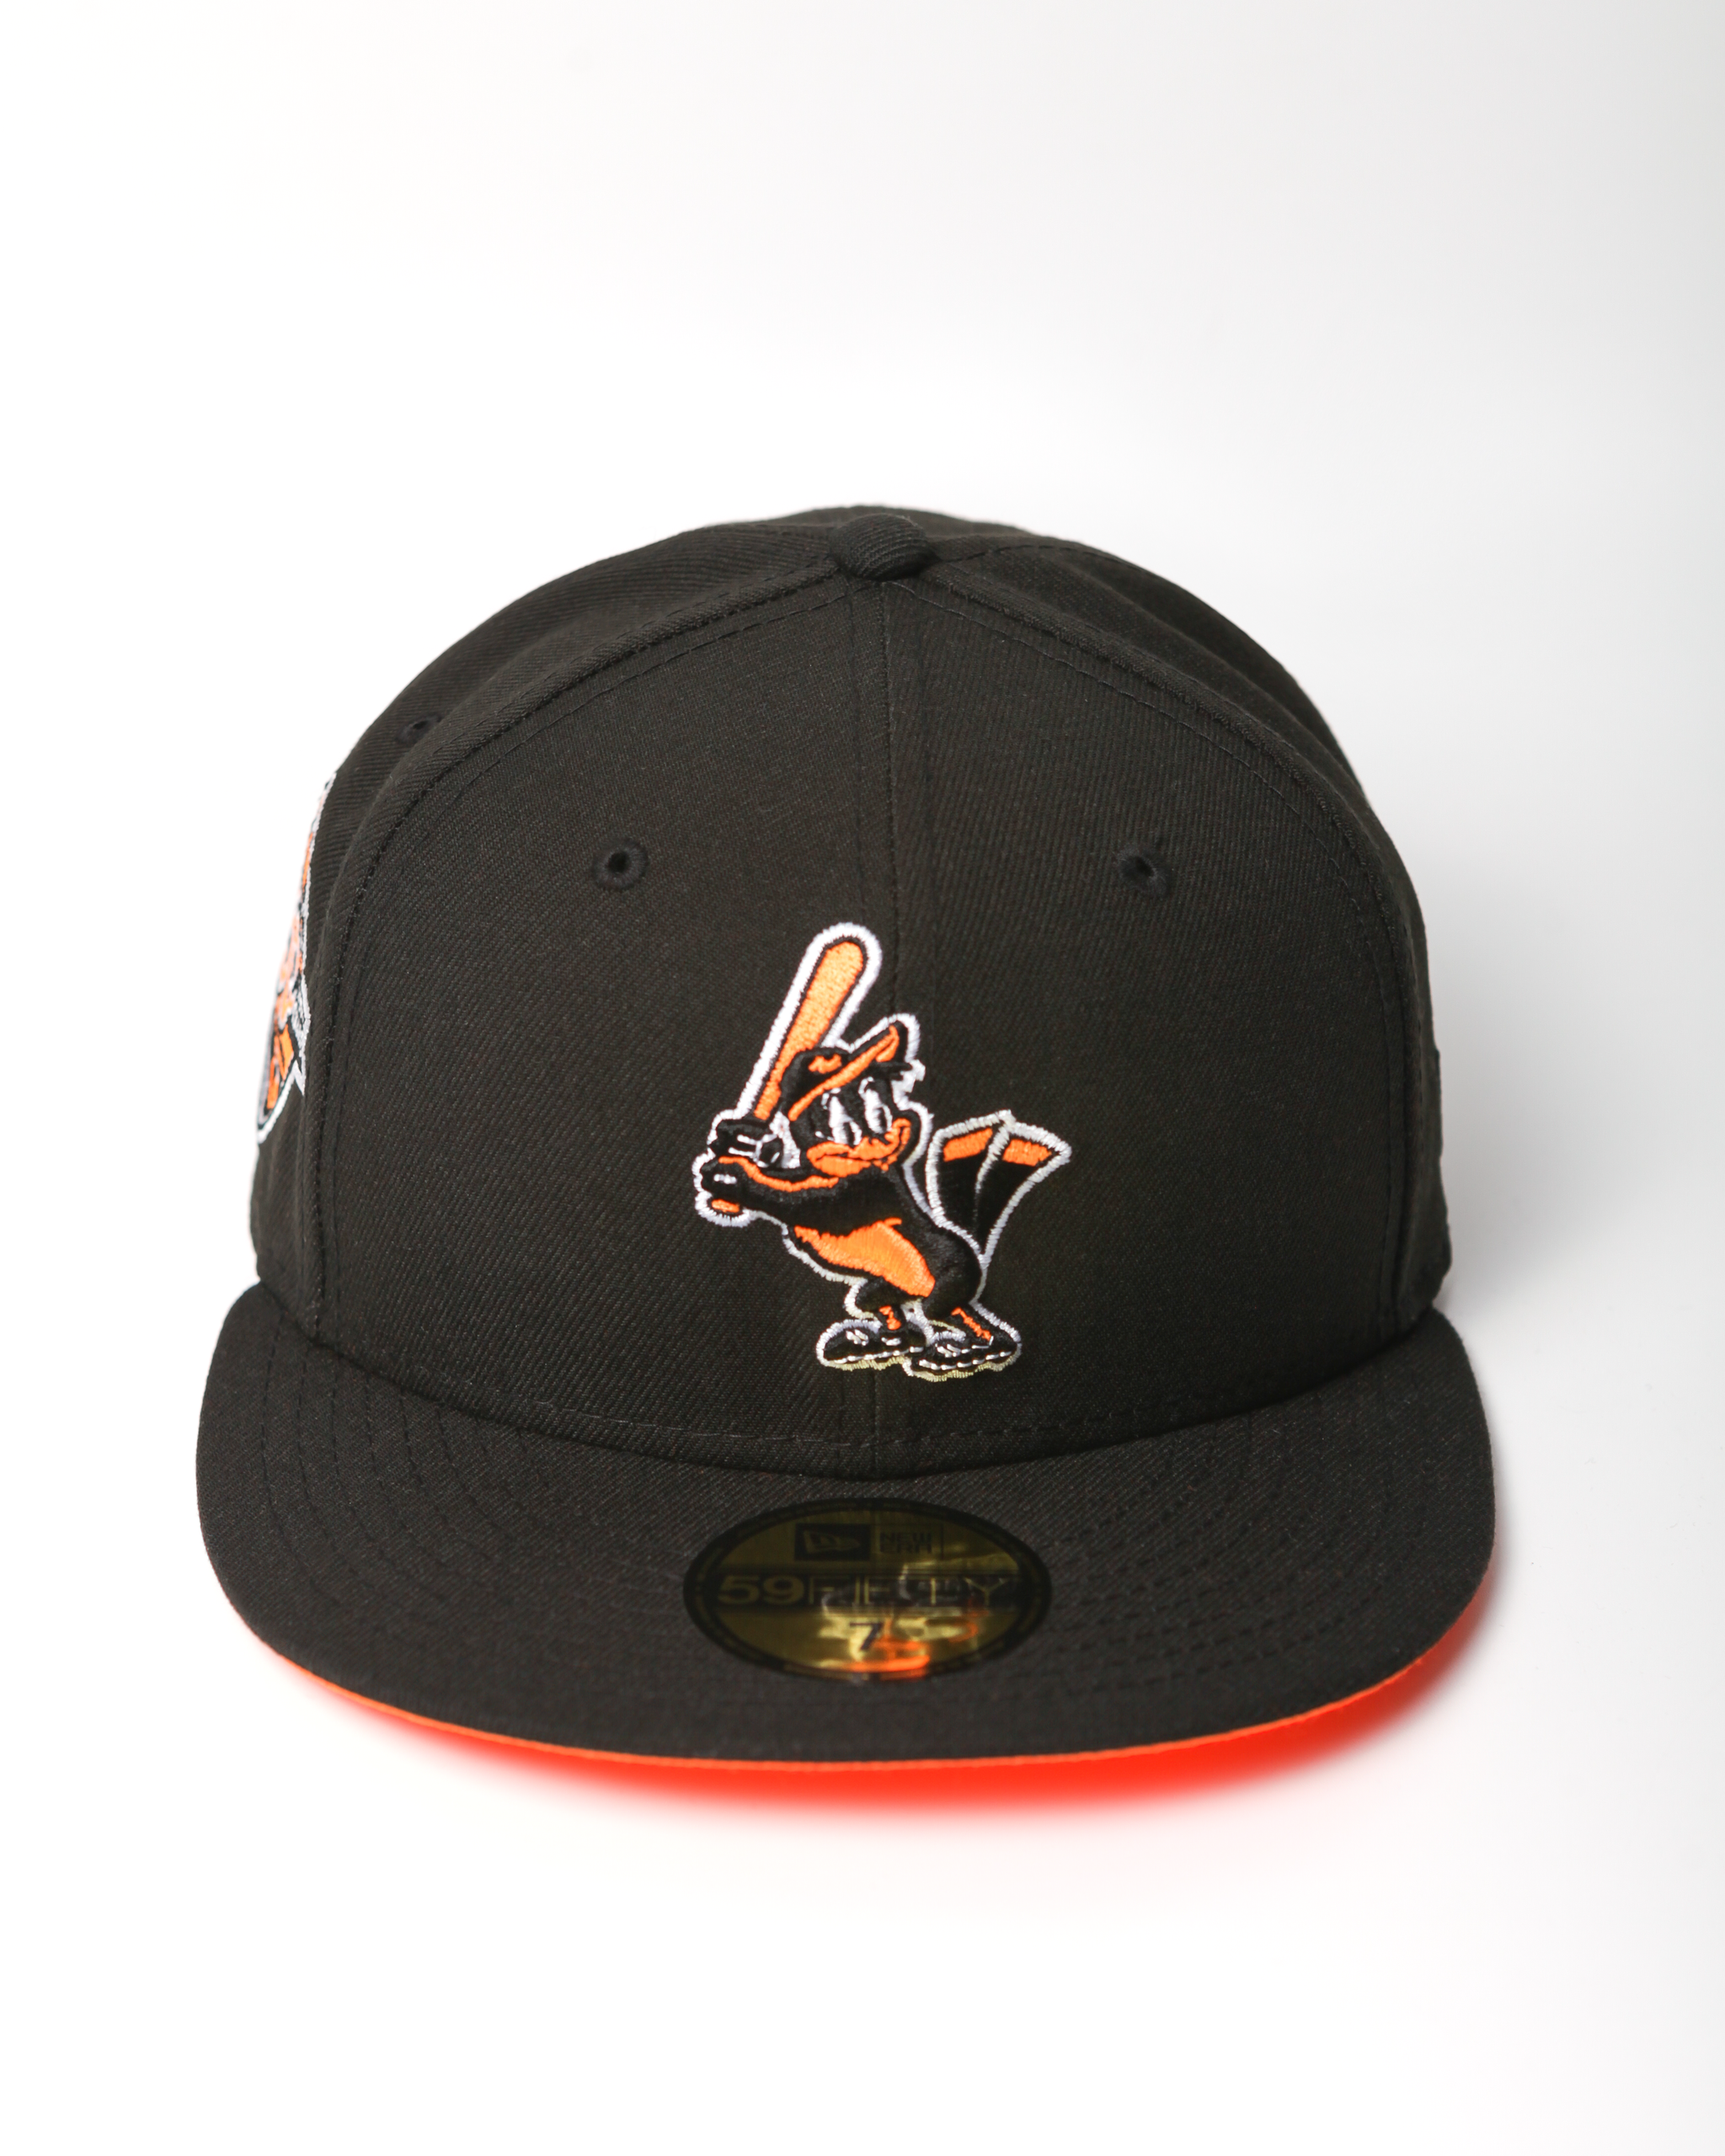 Livestock x New Era MLB Baltimore Orioles Hat / Black